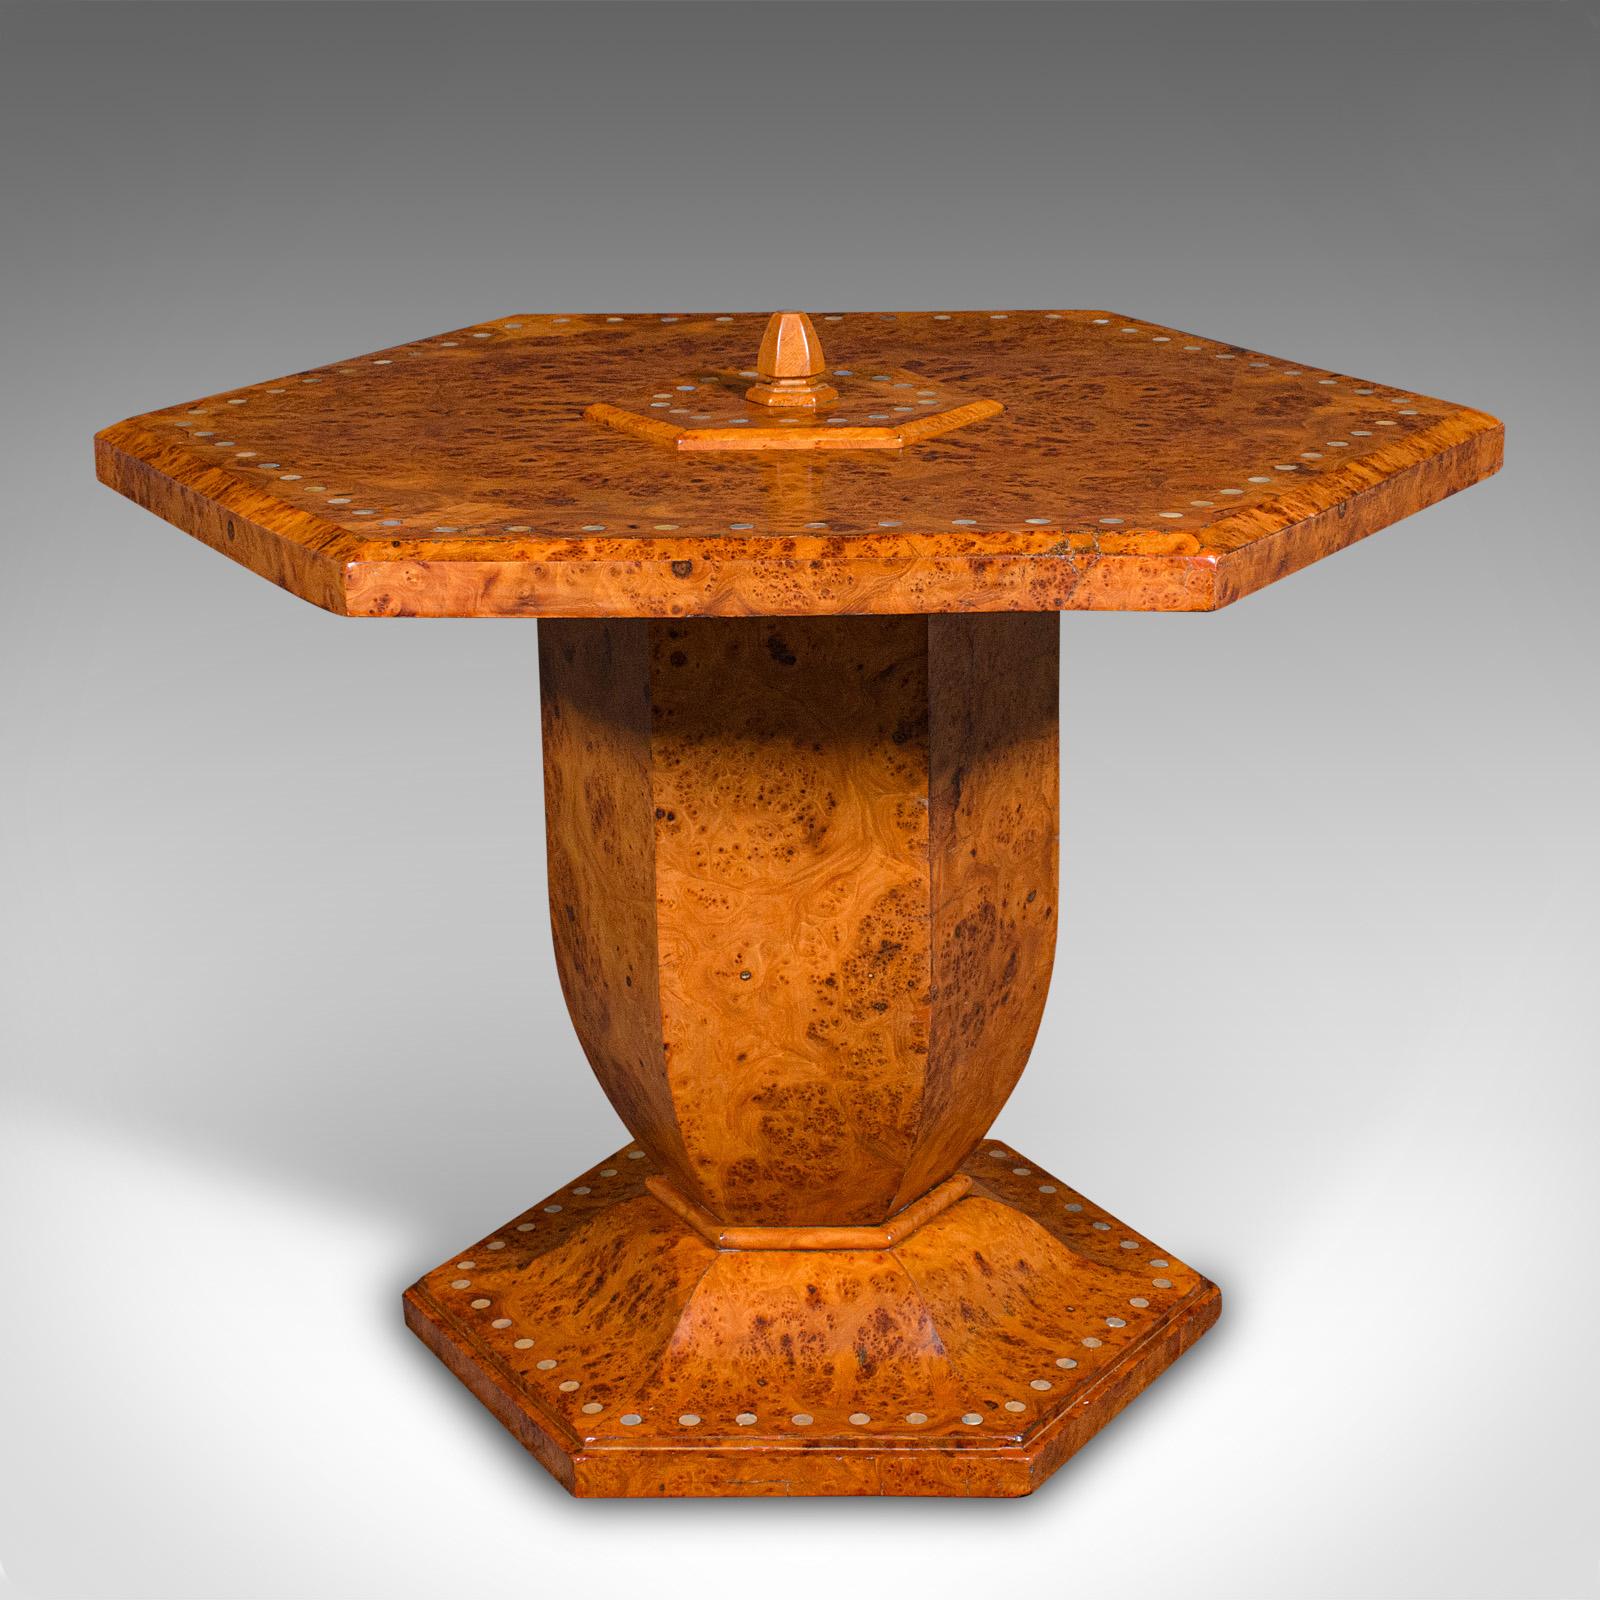 20th Century Vintage Hexagonal Coffee Table, English, Burr Walnut, Centrepiece, Art Deco For Sale